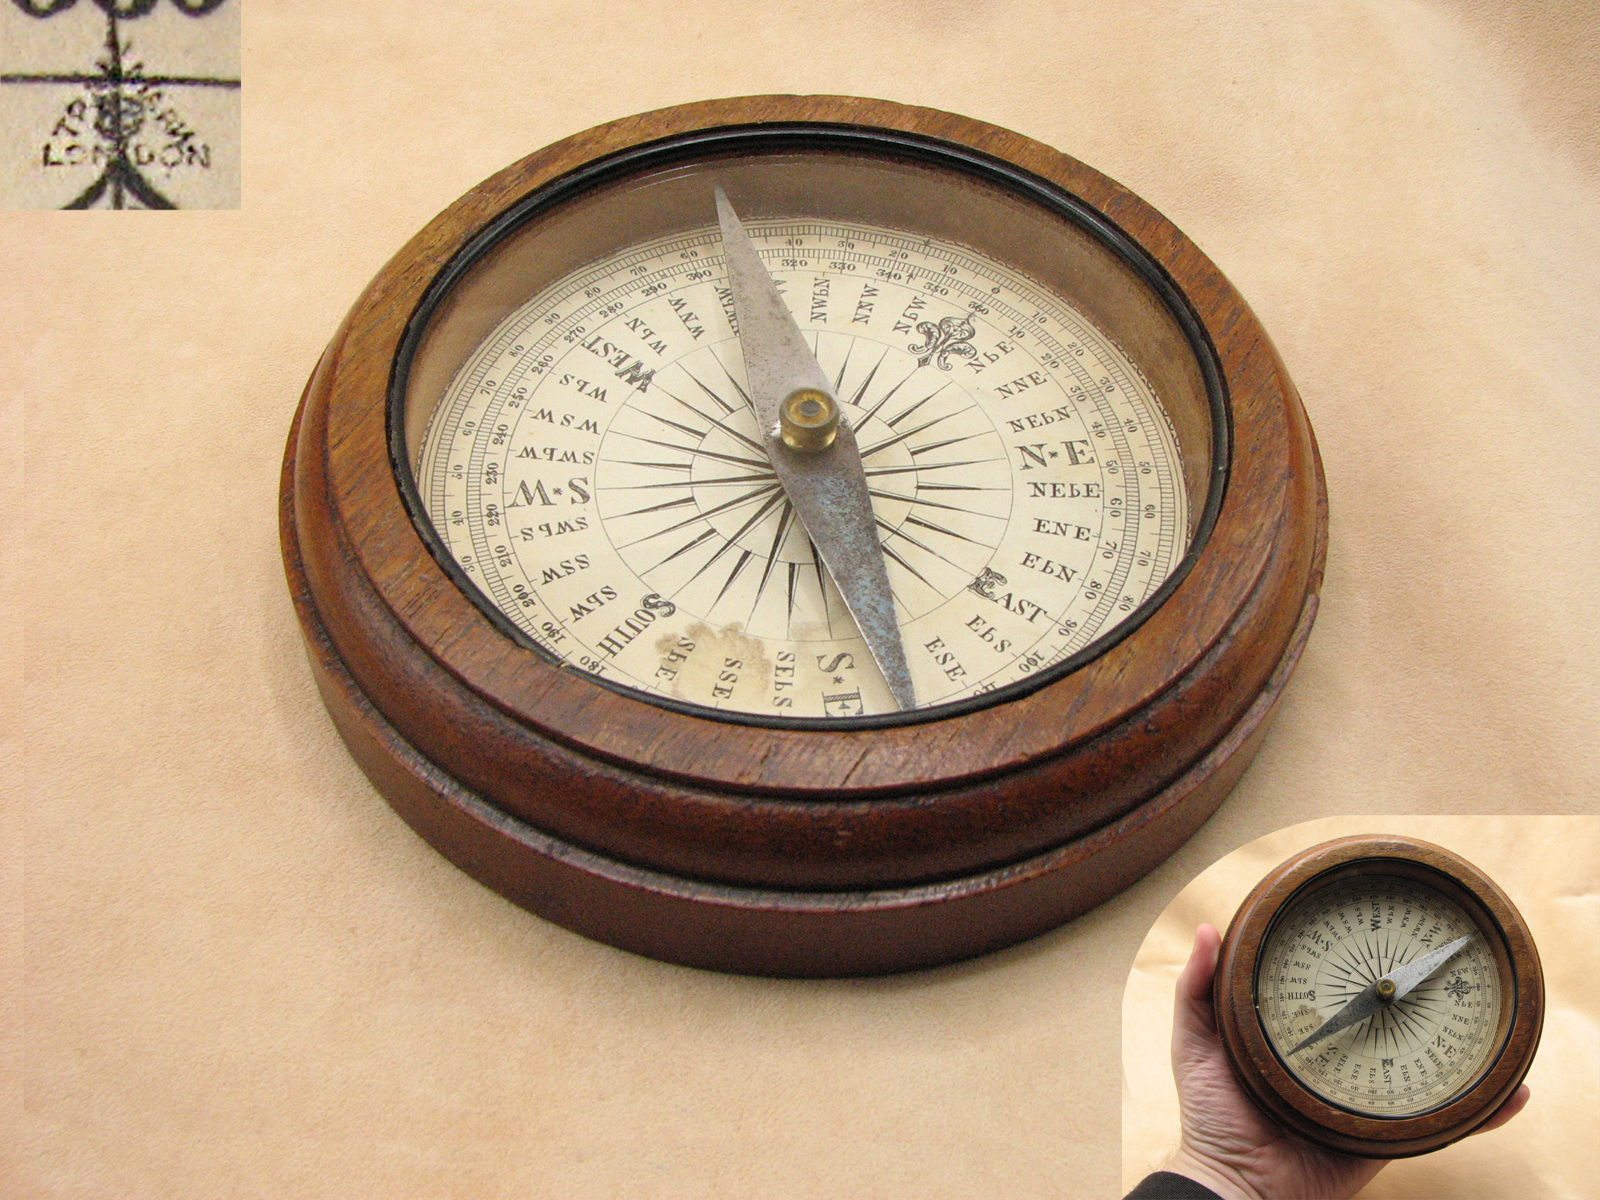 Edwardian mahogany cased desk top compass circa 1910